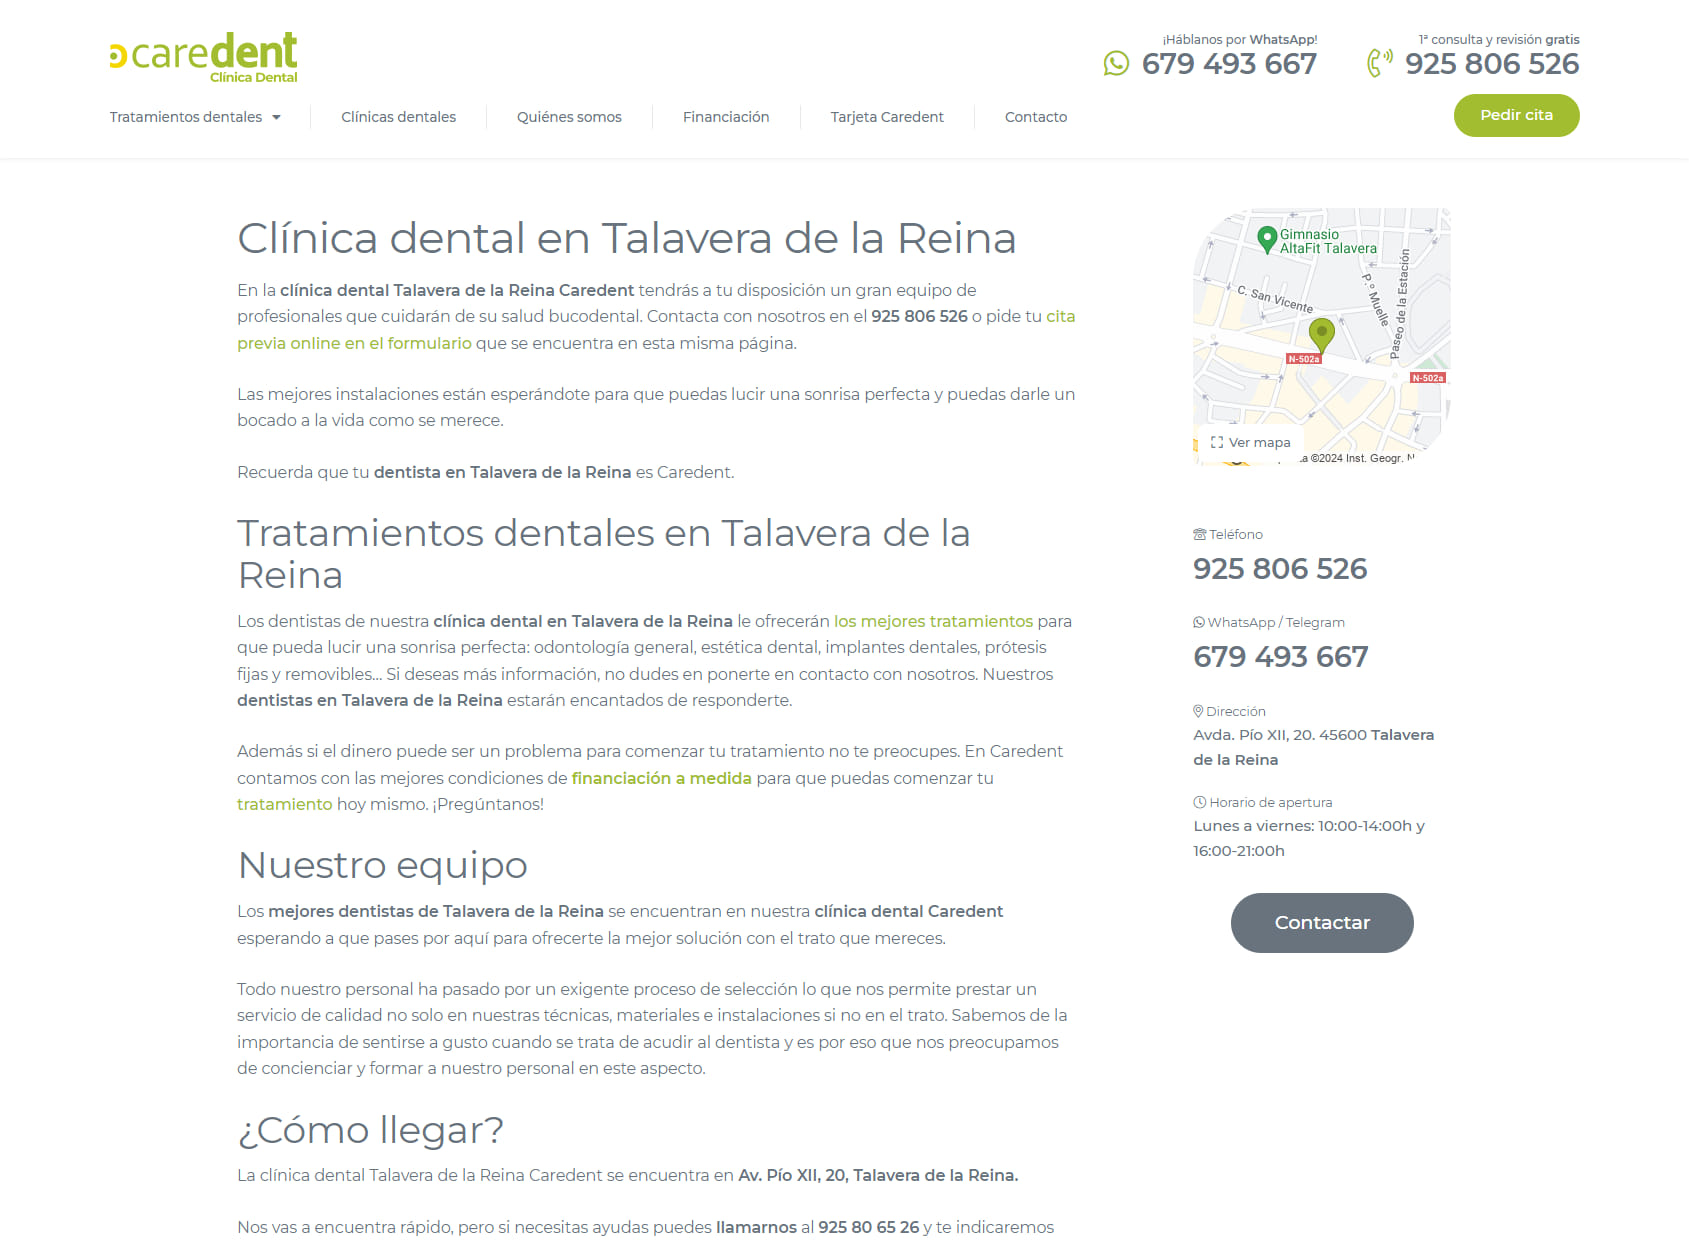 Clínica dental Caredent